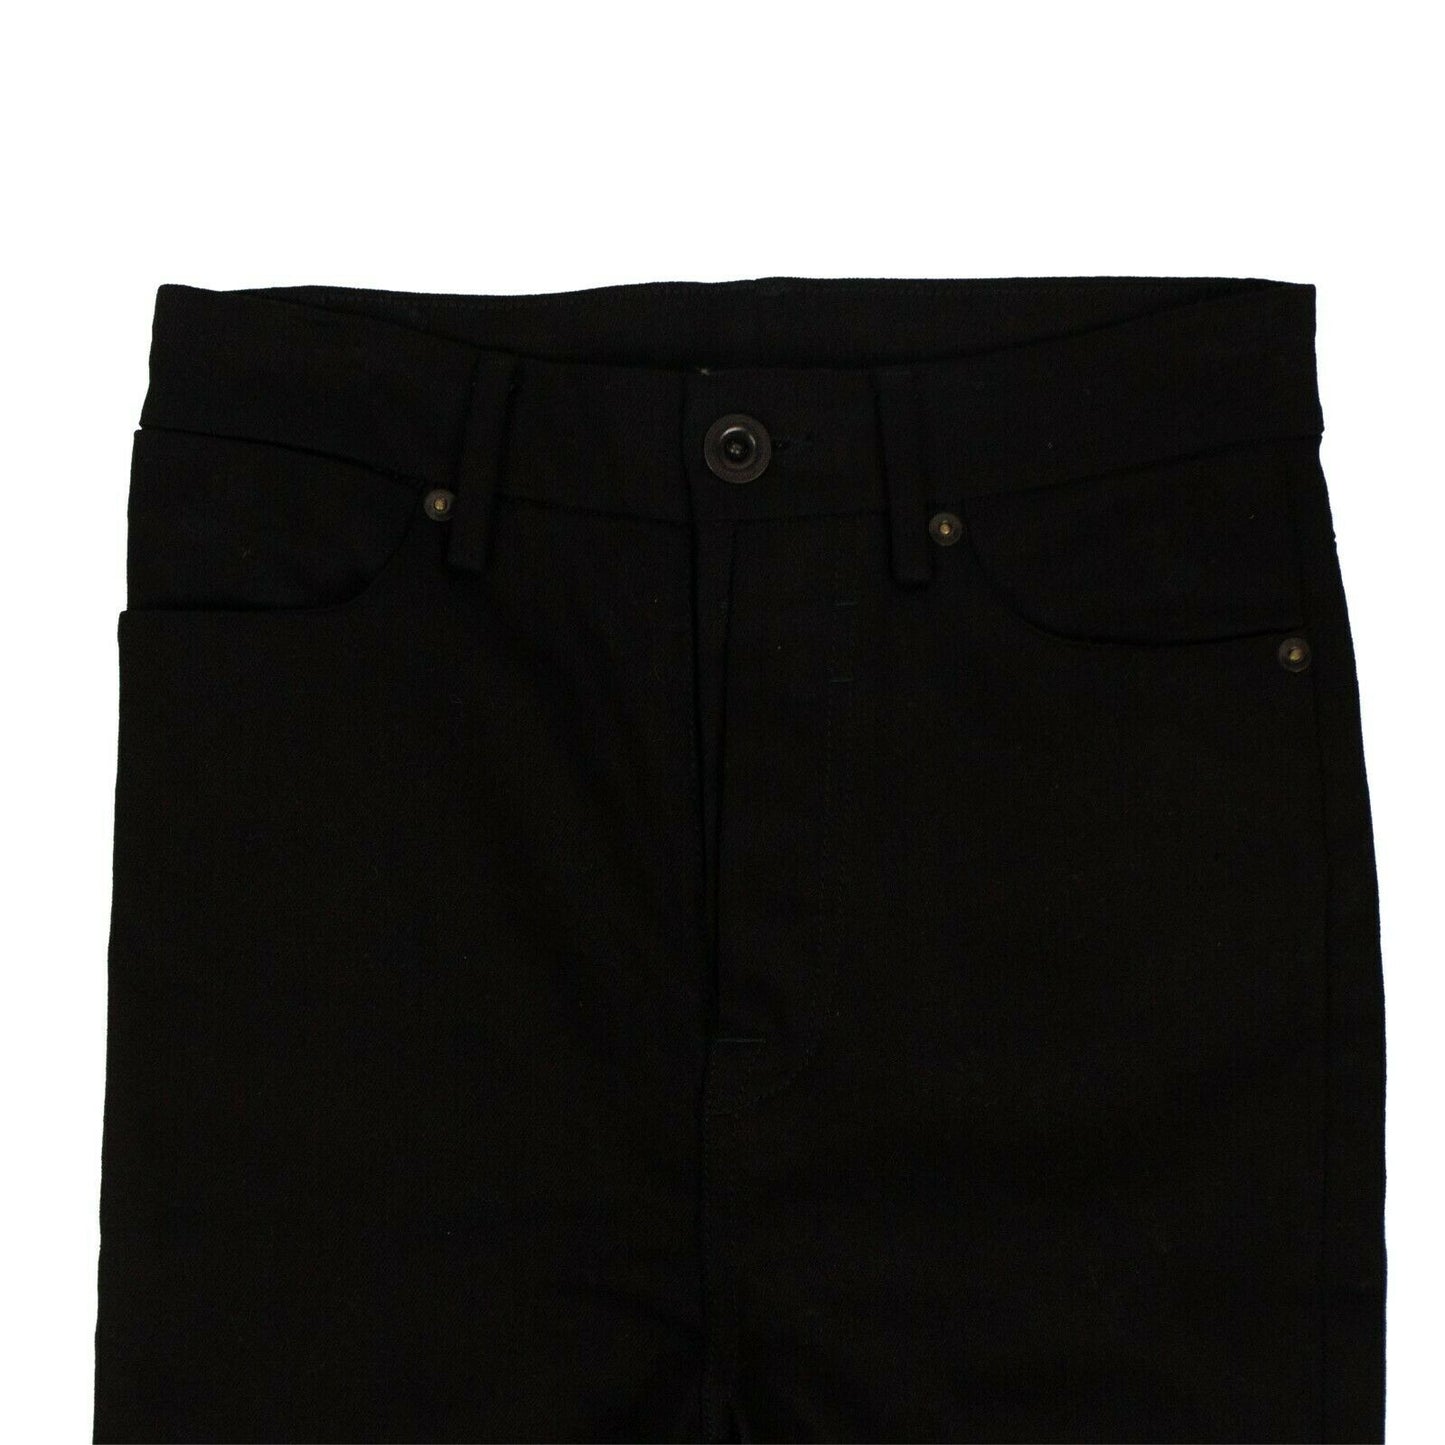 Unravel Project Cotton Super Skinny Stretch Jeans Pants - Black